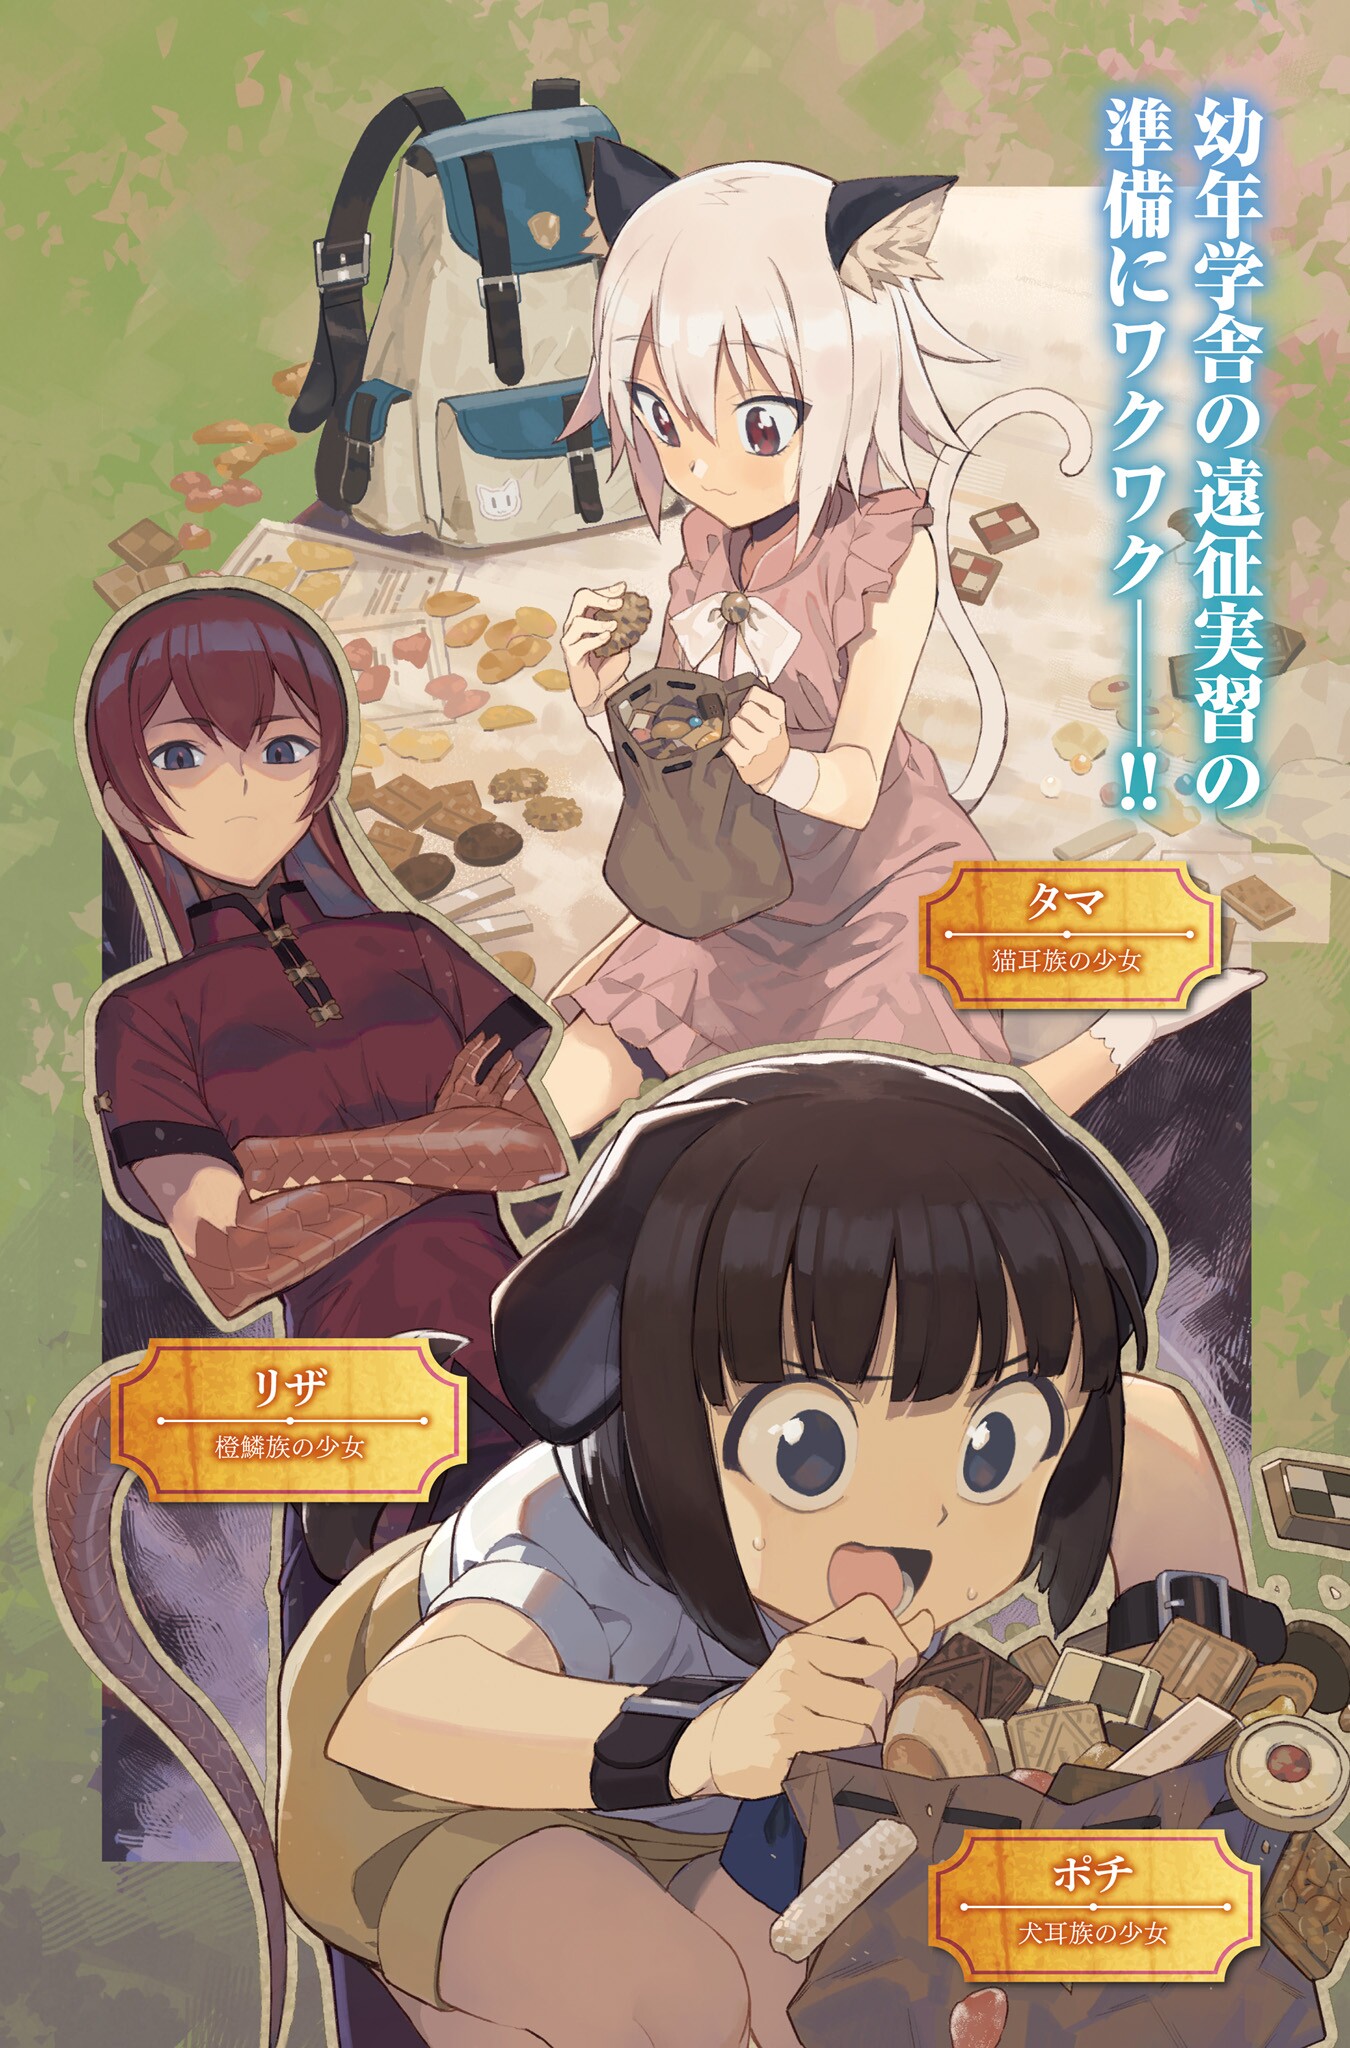 HD wallpaper: Anime, Death March kara Hajimaru Isekai Kyousoukyoku, Pochi (Death  March Kara Hajimaru Isekai Kyousoukyoku)